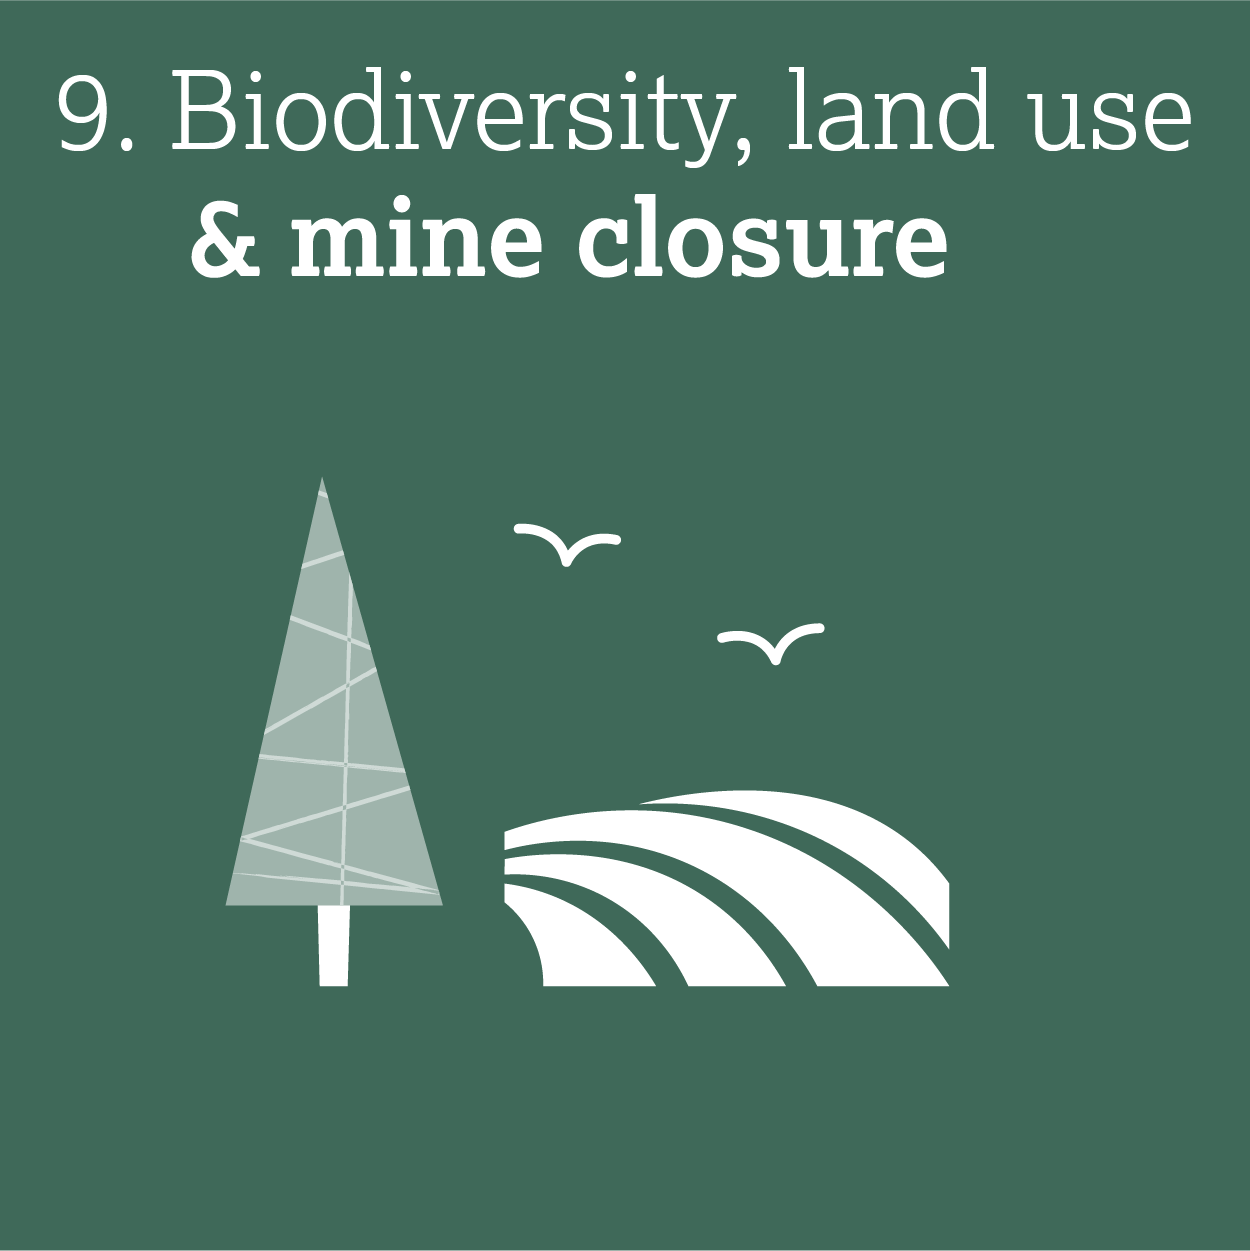 9. Biodiversity, land use and mine closure